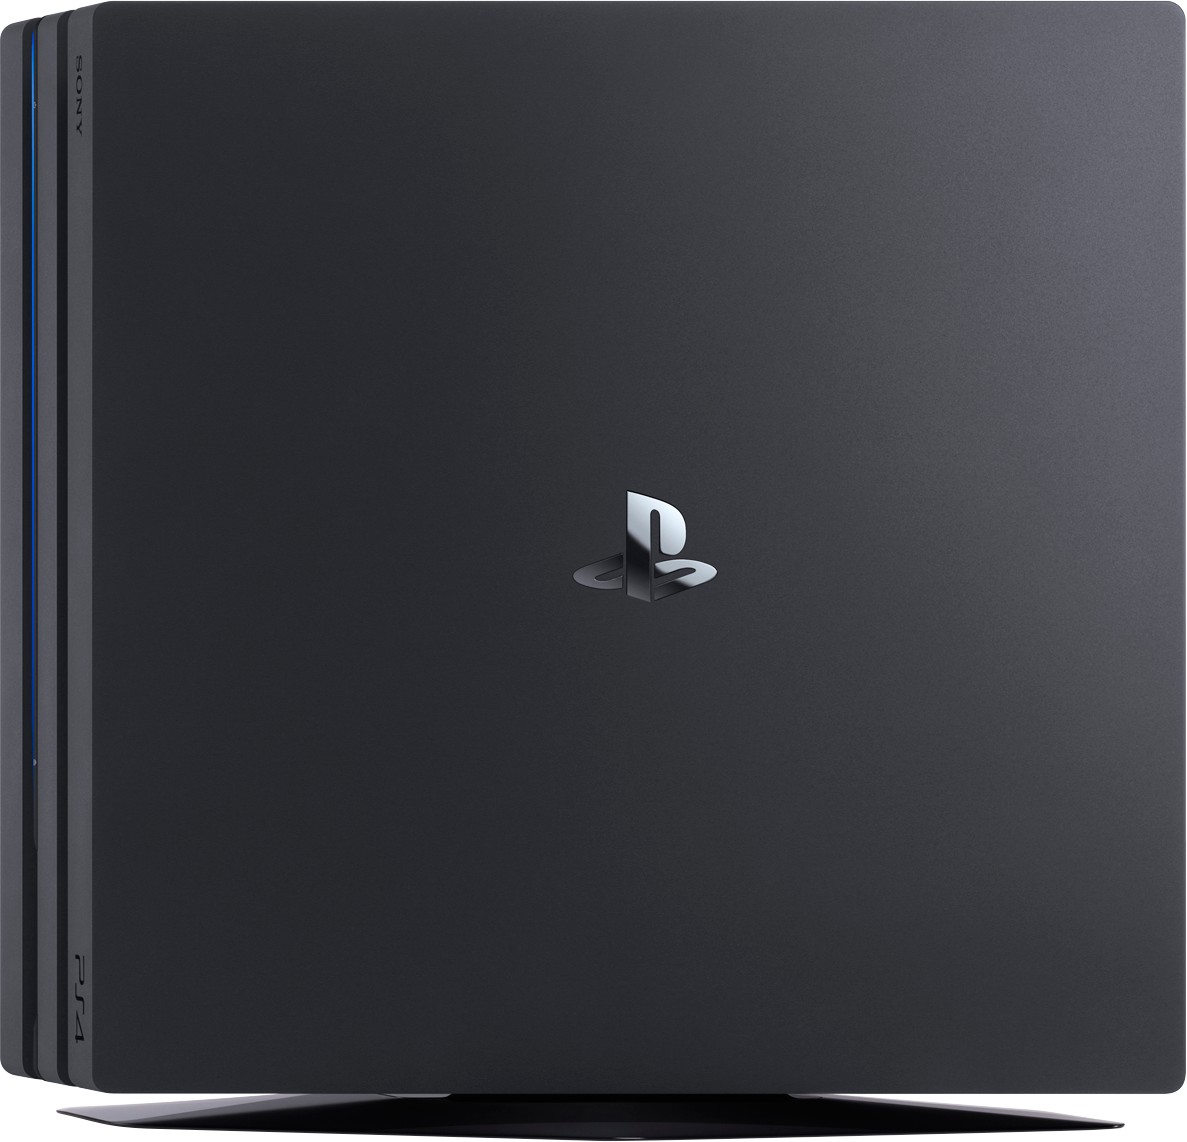 PlayStation 4 Pro (1TB, Jet Black)